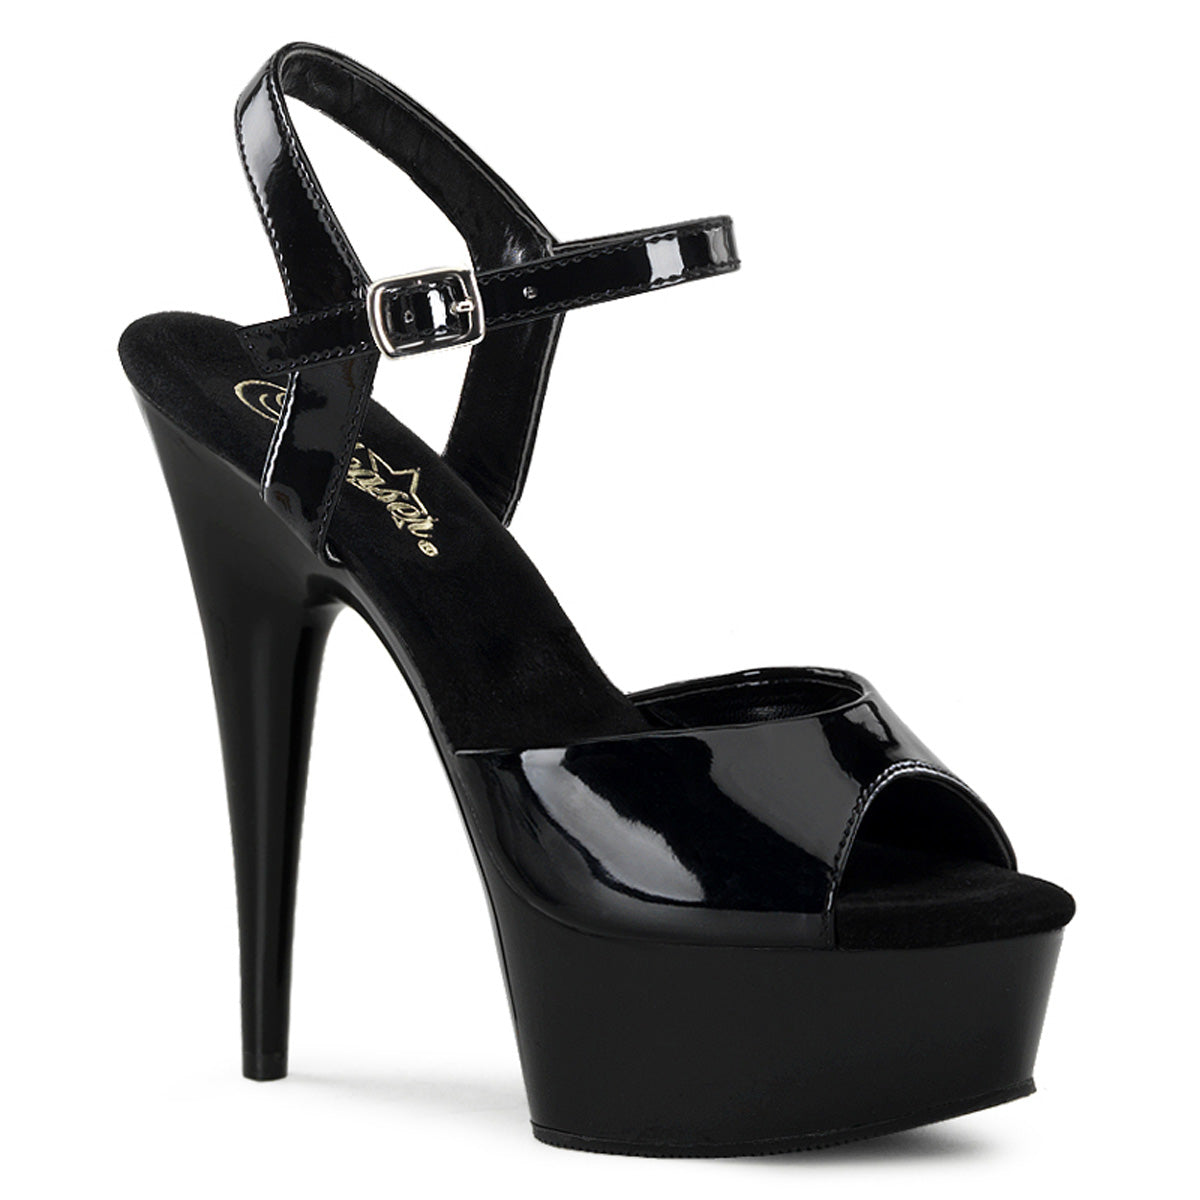 DELIGHT-609 6" Heel Black Patent  Stripper Platforms High Heels